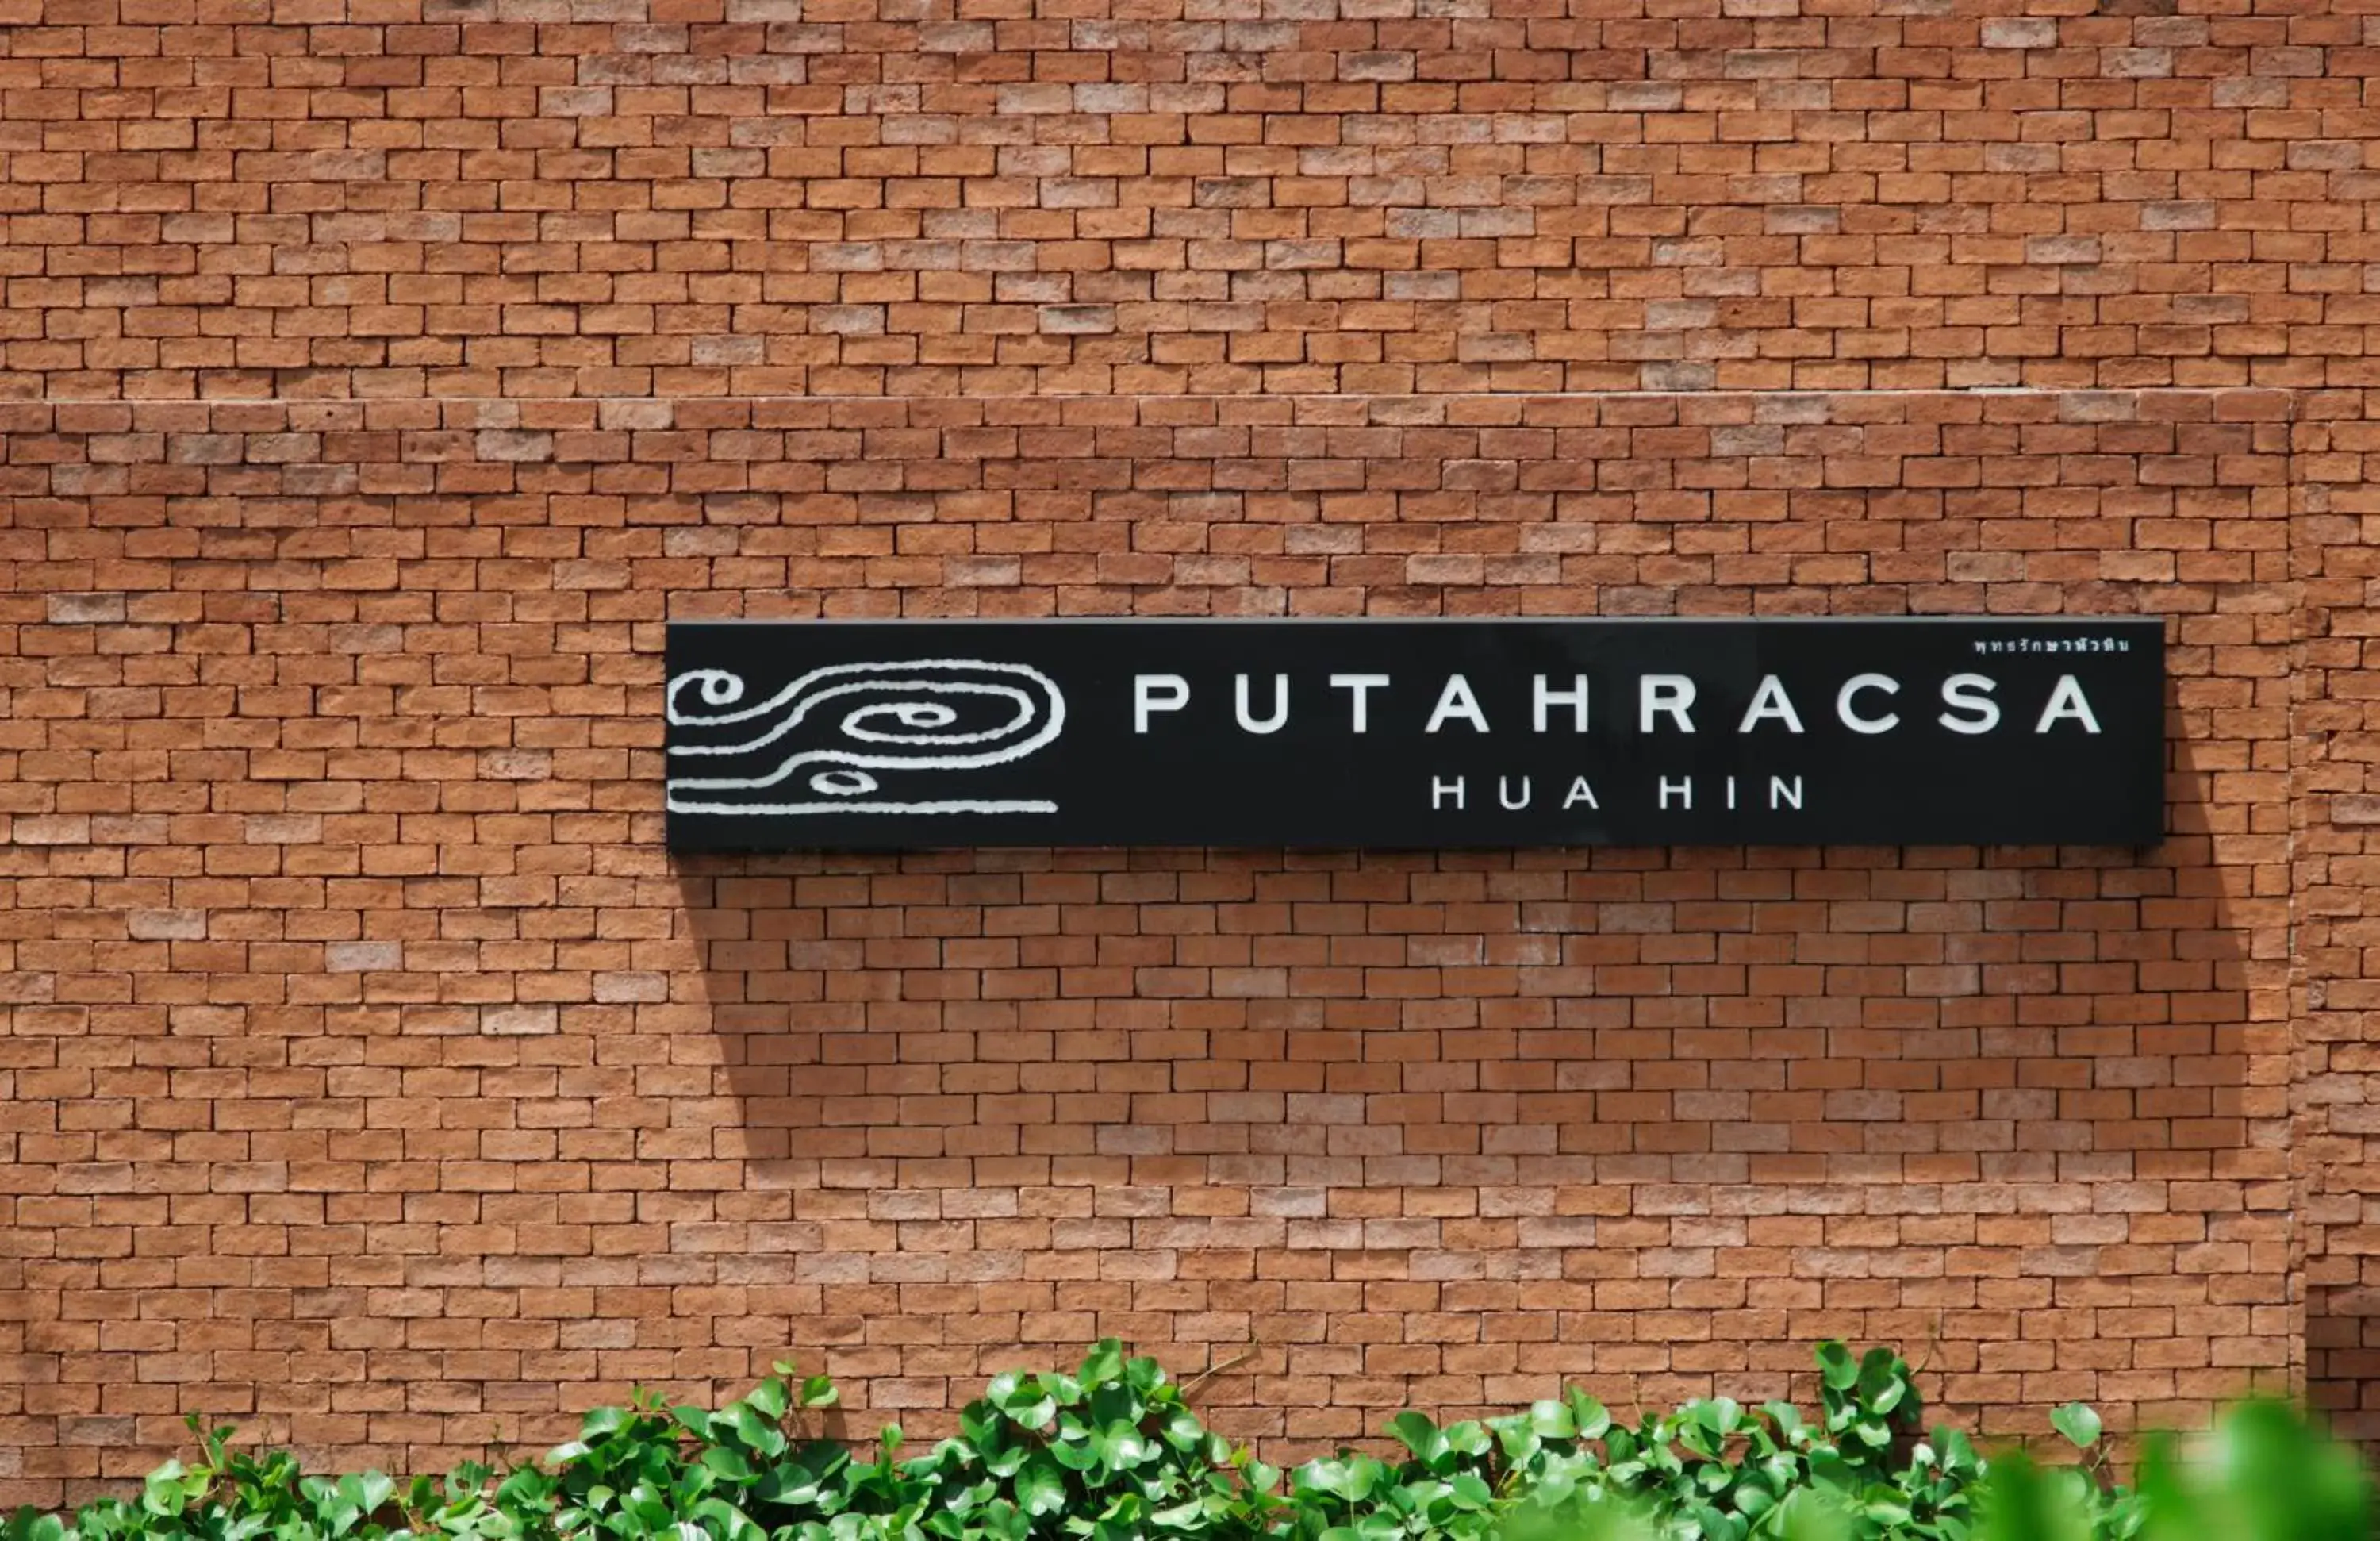 Property logo or sign in Putahracsa Hua Hin